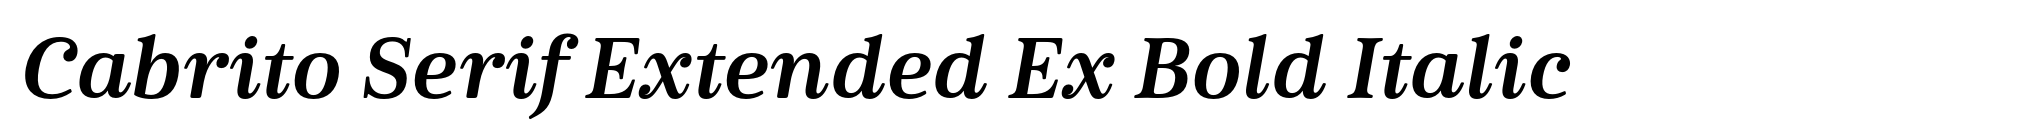 Cabrito Serif Extended Ex Bold Italic image